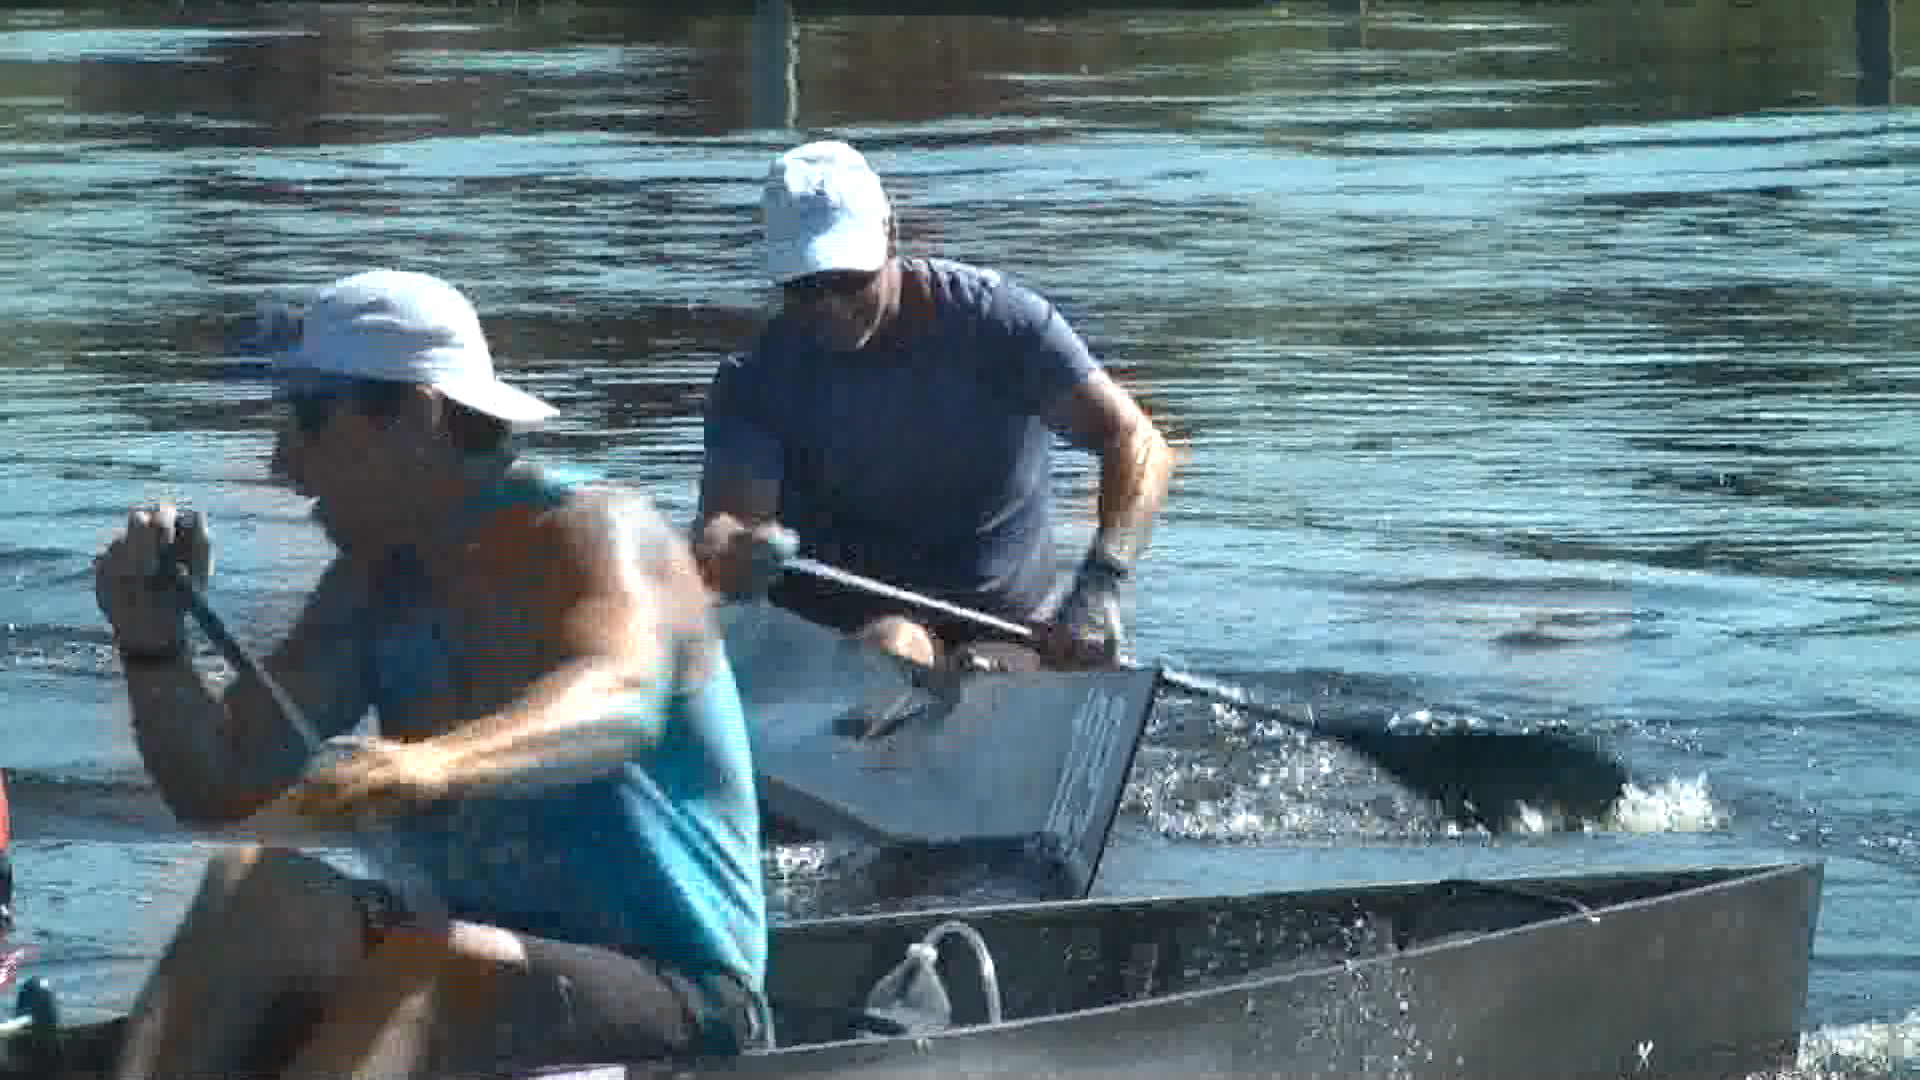 AuSable River Canoe Marathon canceled for 2020 WBKB 11